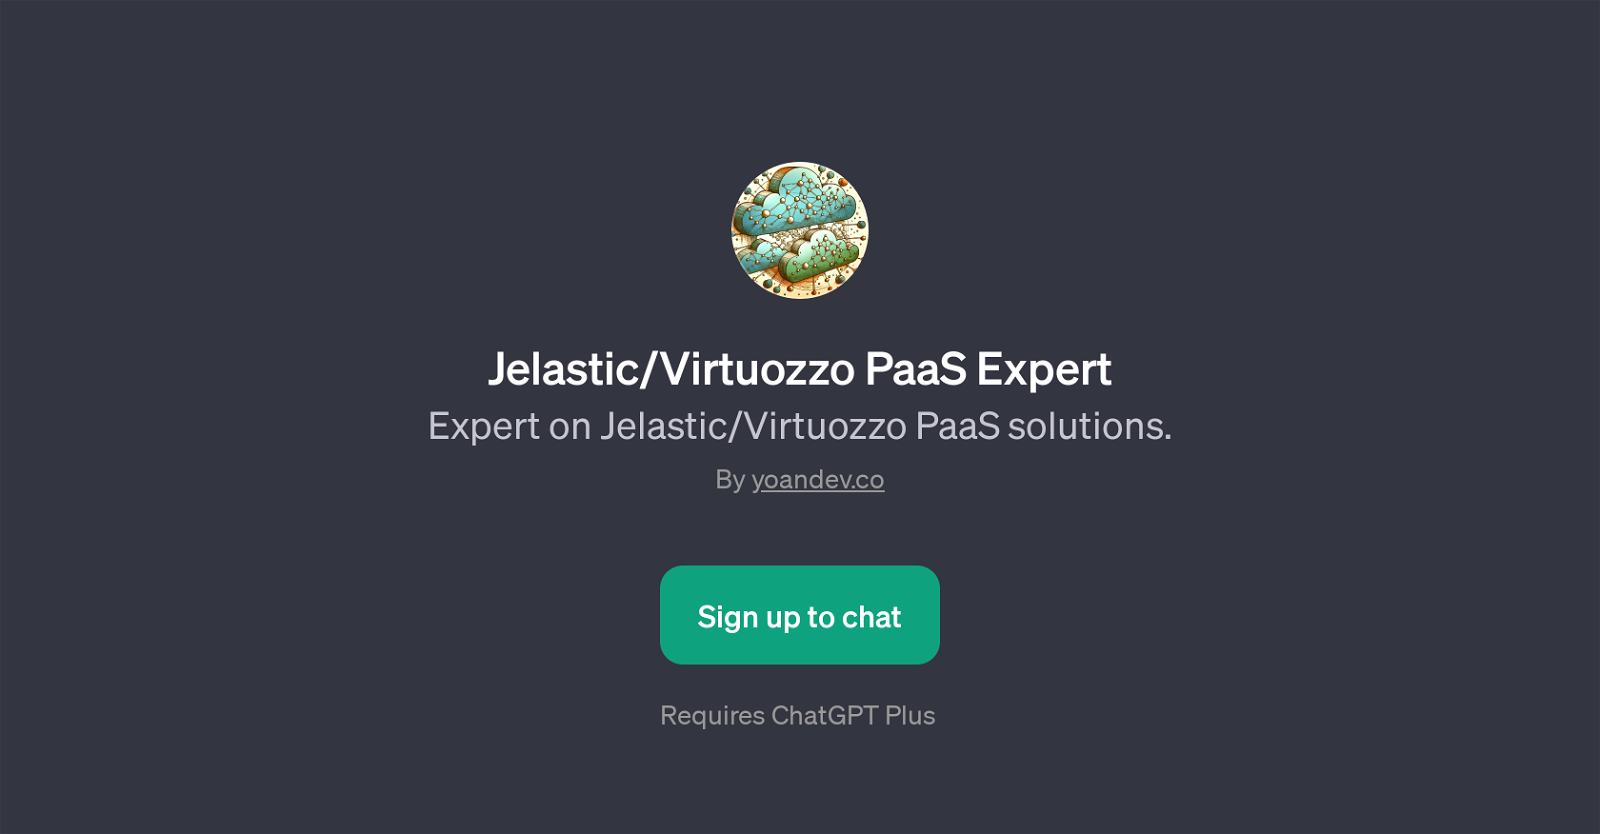 Jelastic/Virtuozzo PaaS Expert website